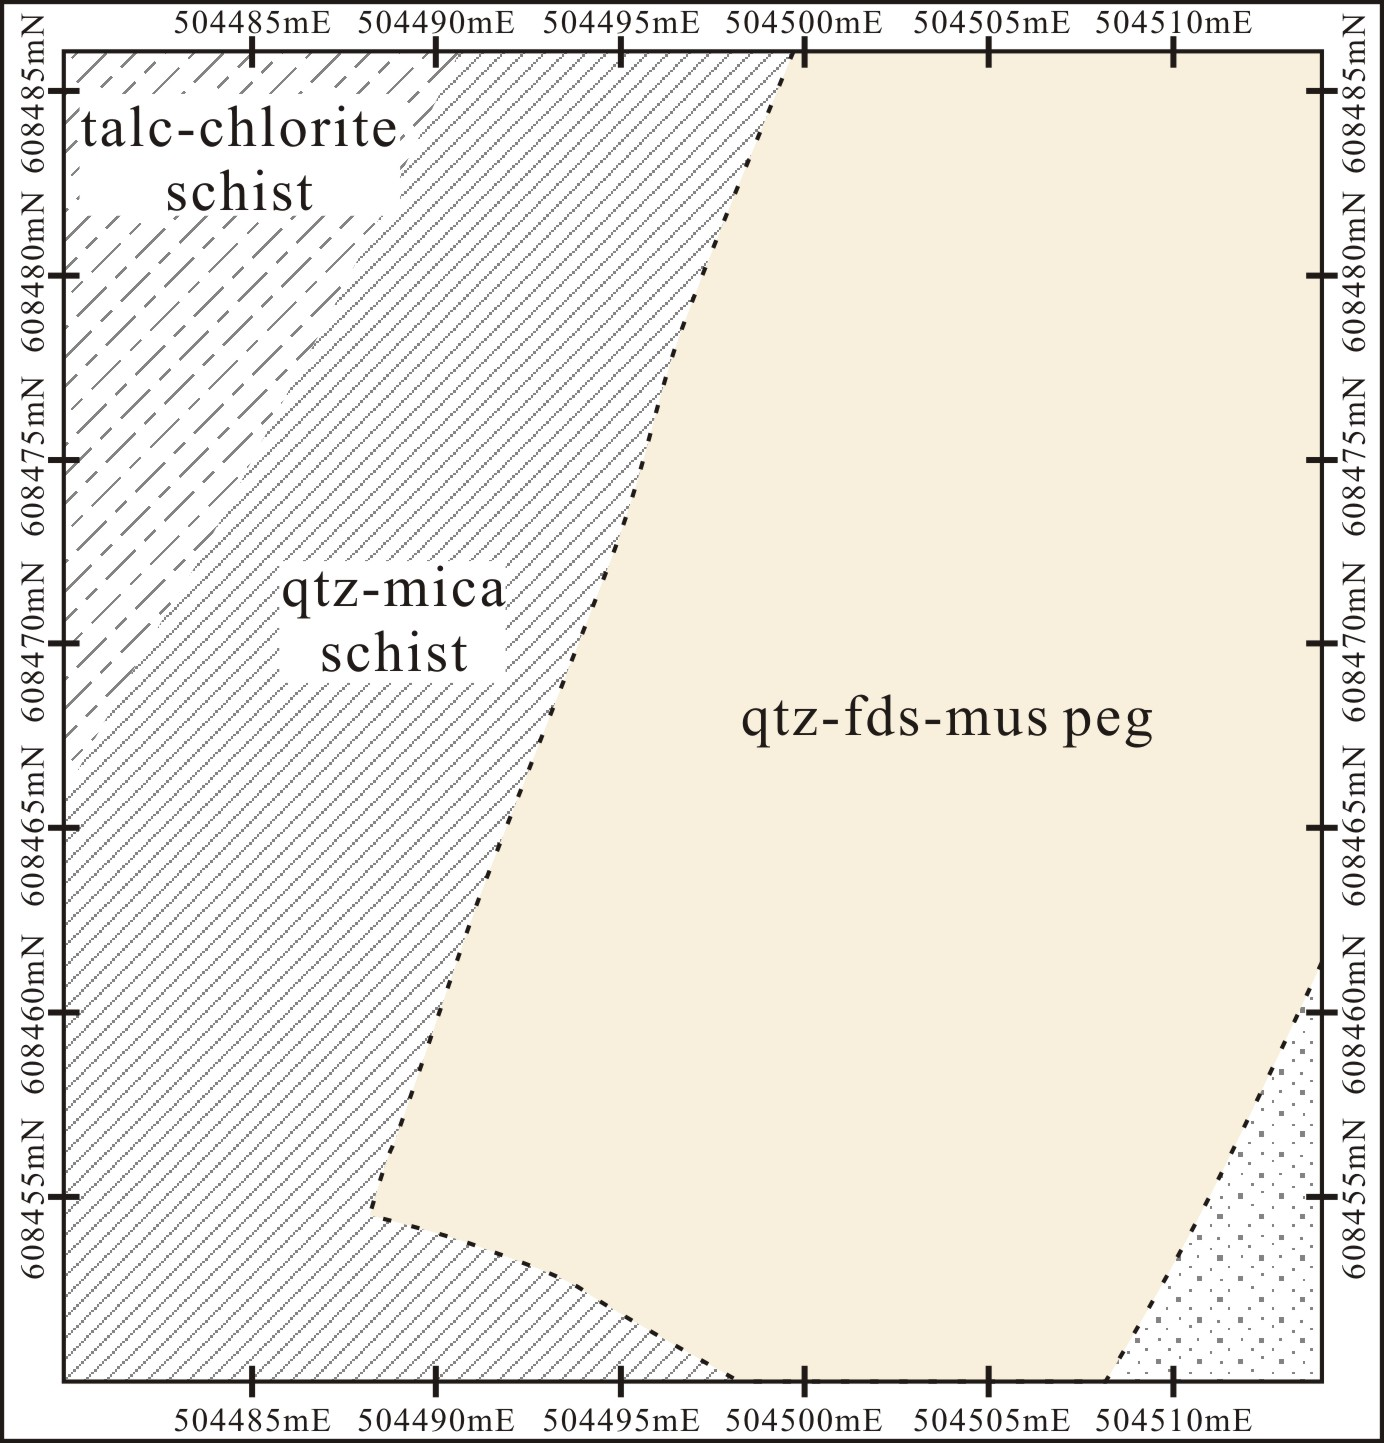 Fig. 1-18. The Bupo pegmatite IV intruded into quartz-mica schist.